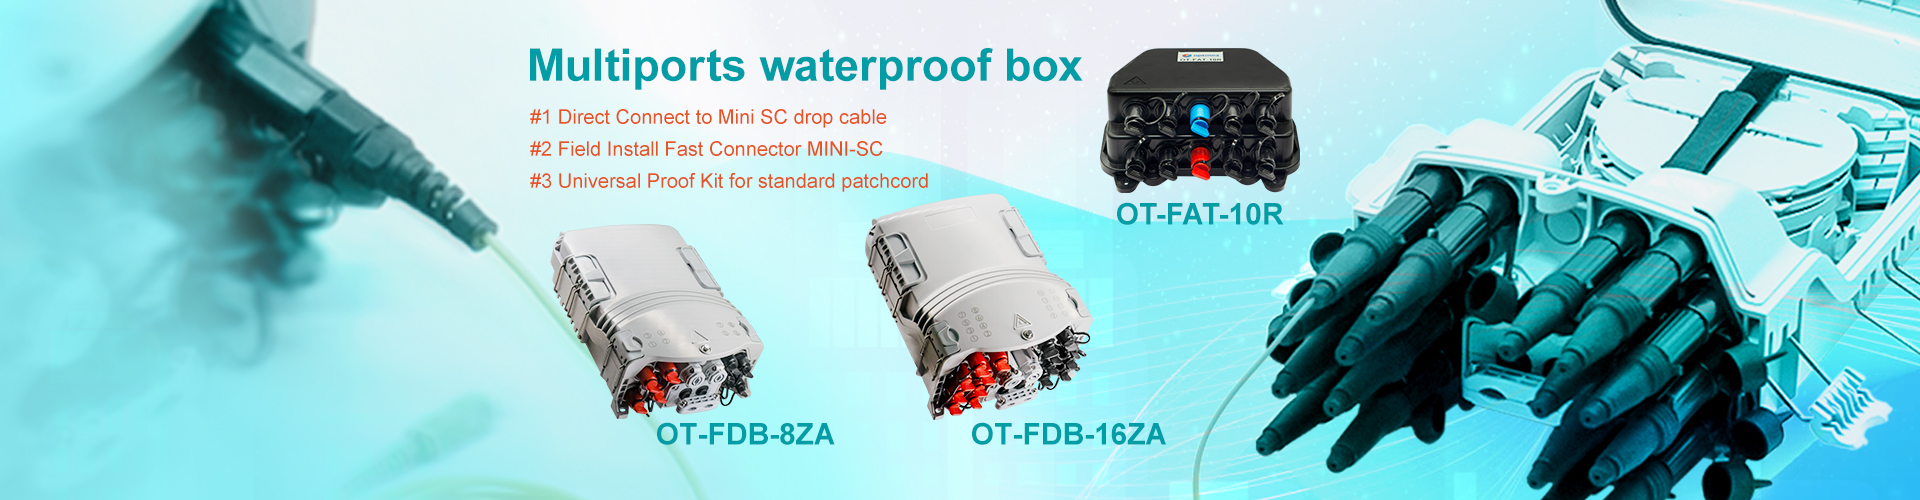 Multiports waterproof box